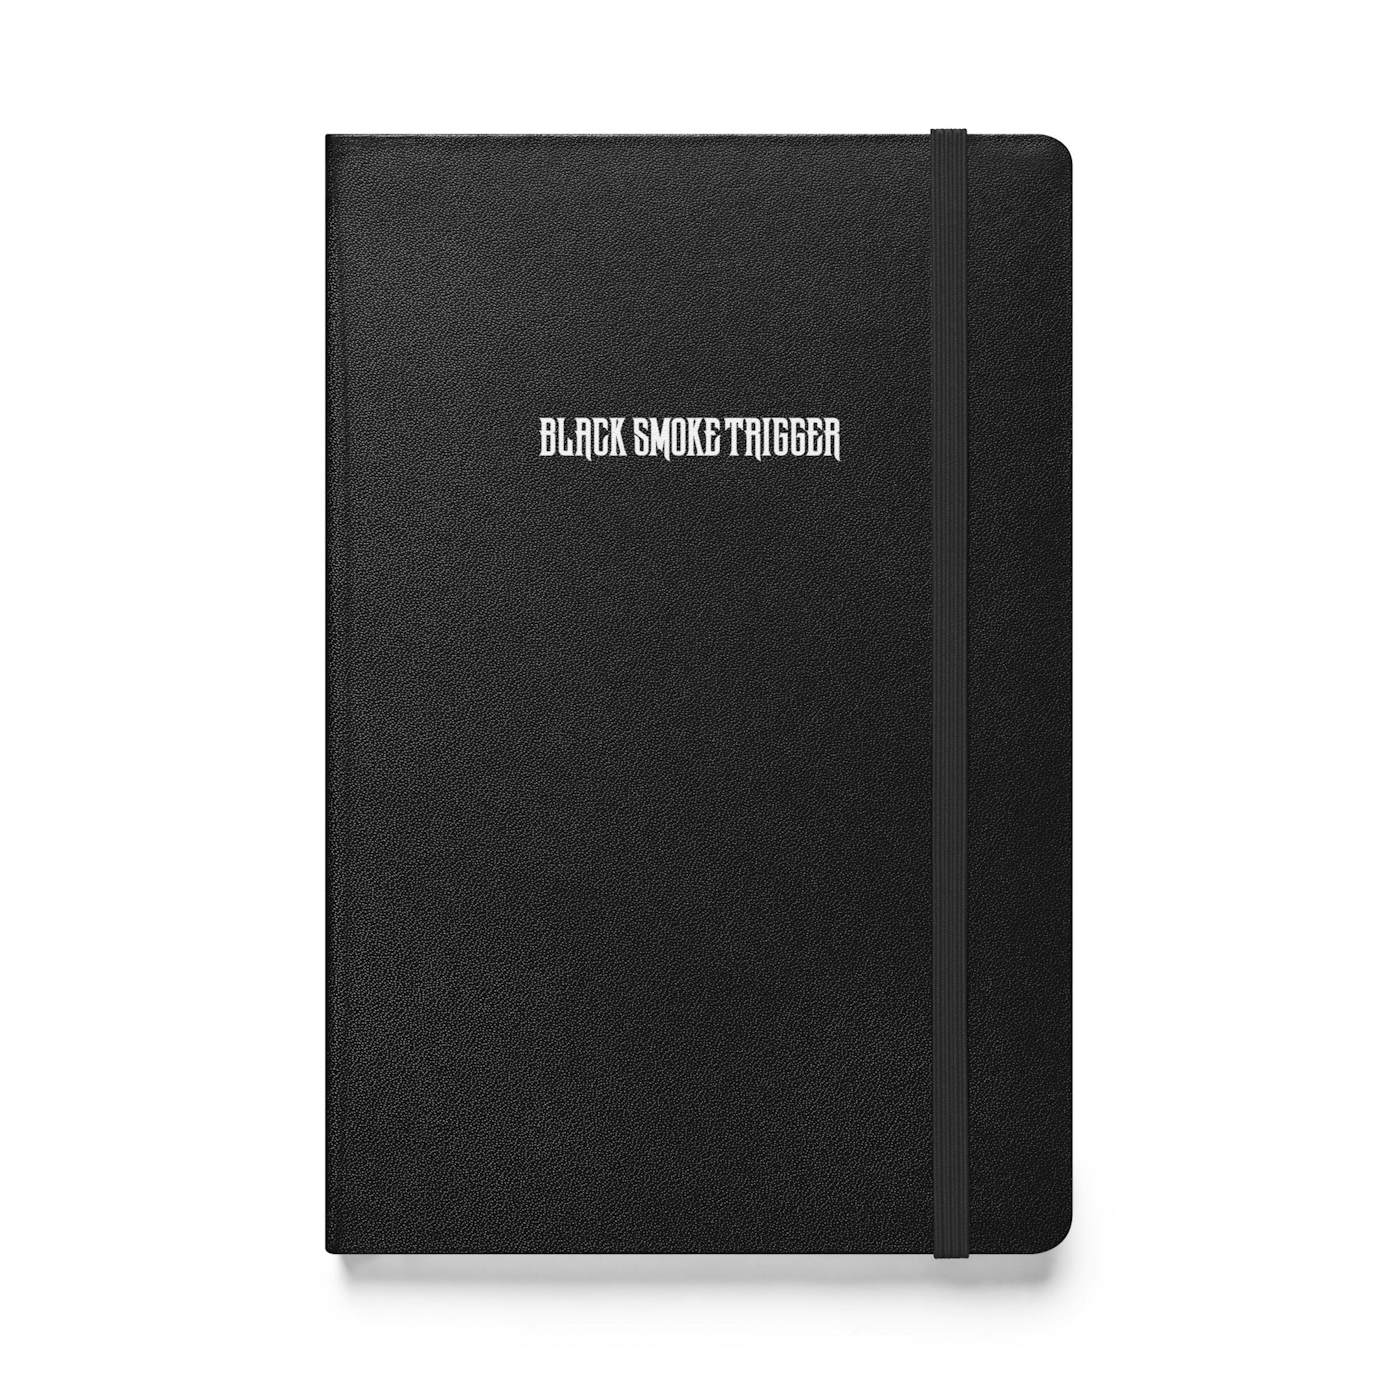 Black Smoke Trigger Hardcover bound notebook